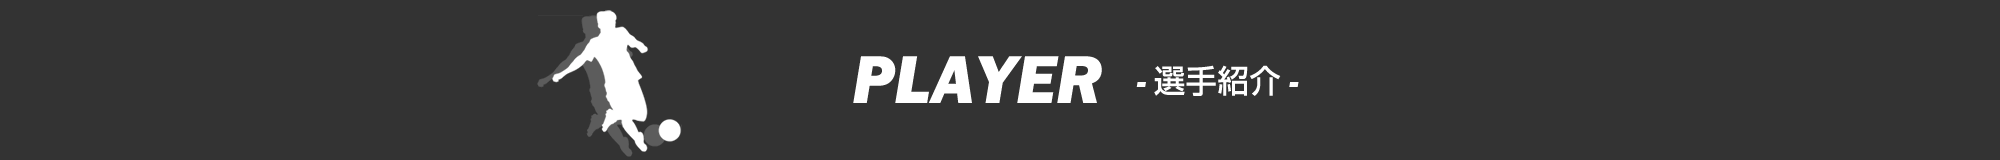 02_player